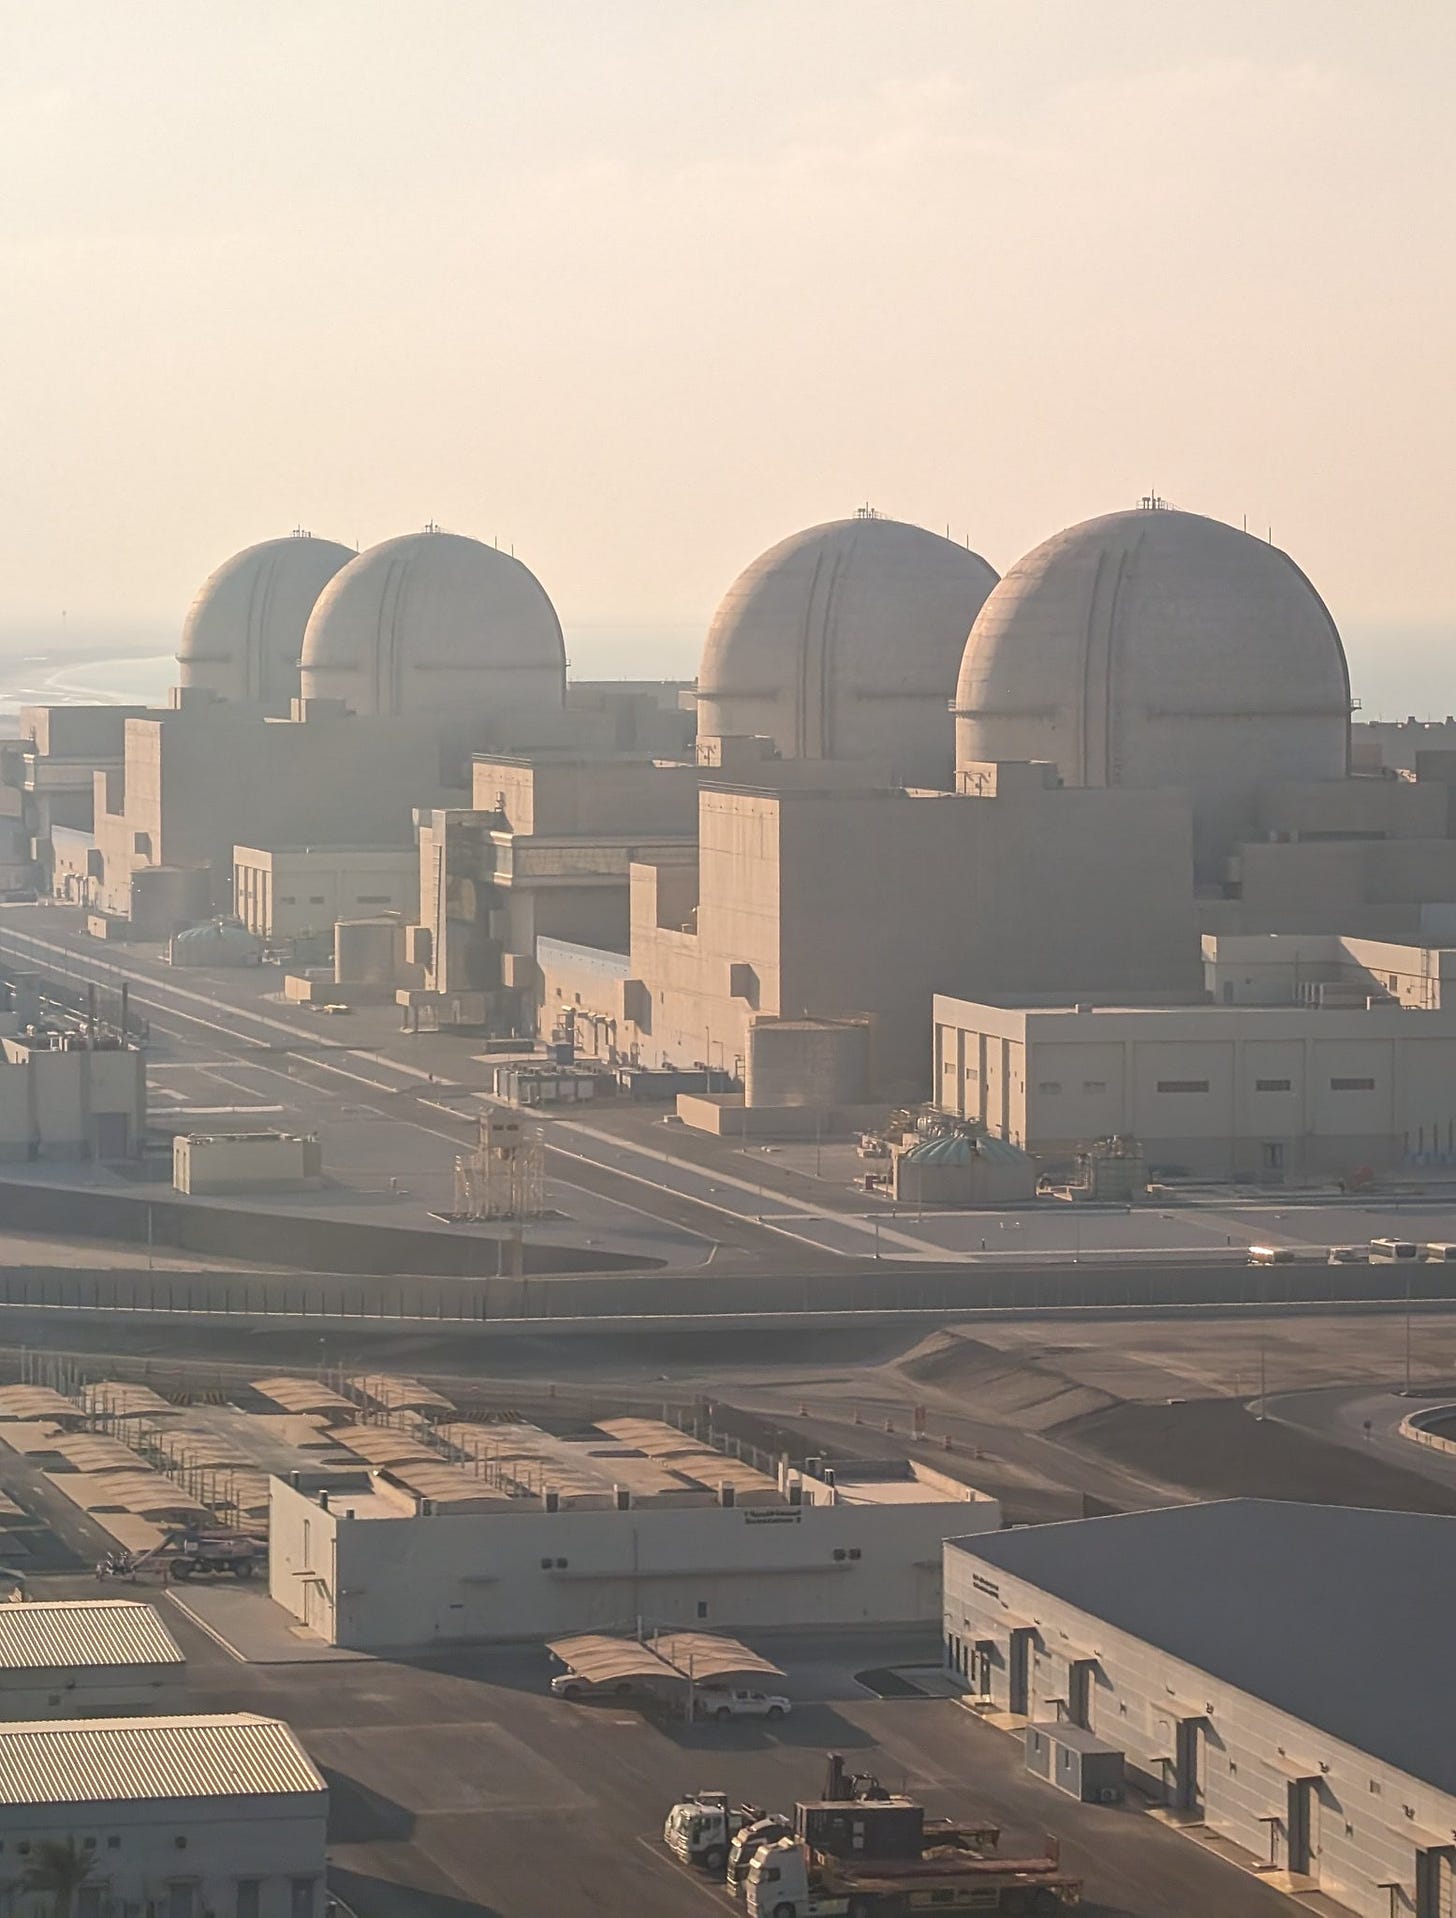 Barakah nuclear power plant from the air, December 2023